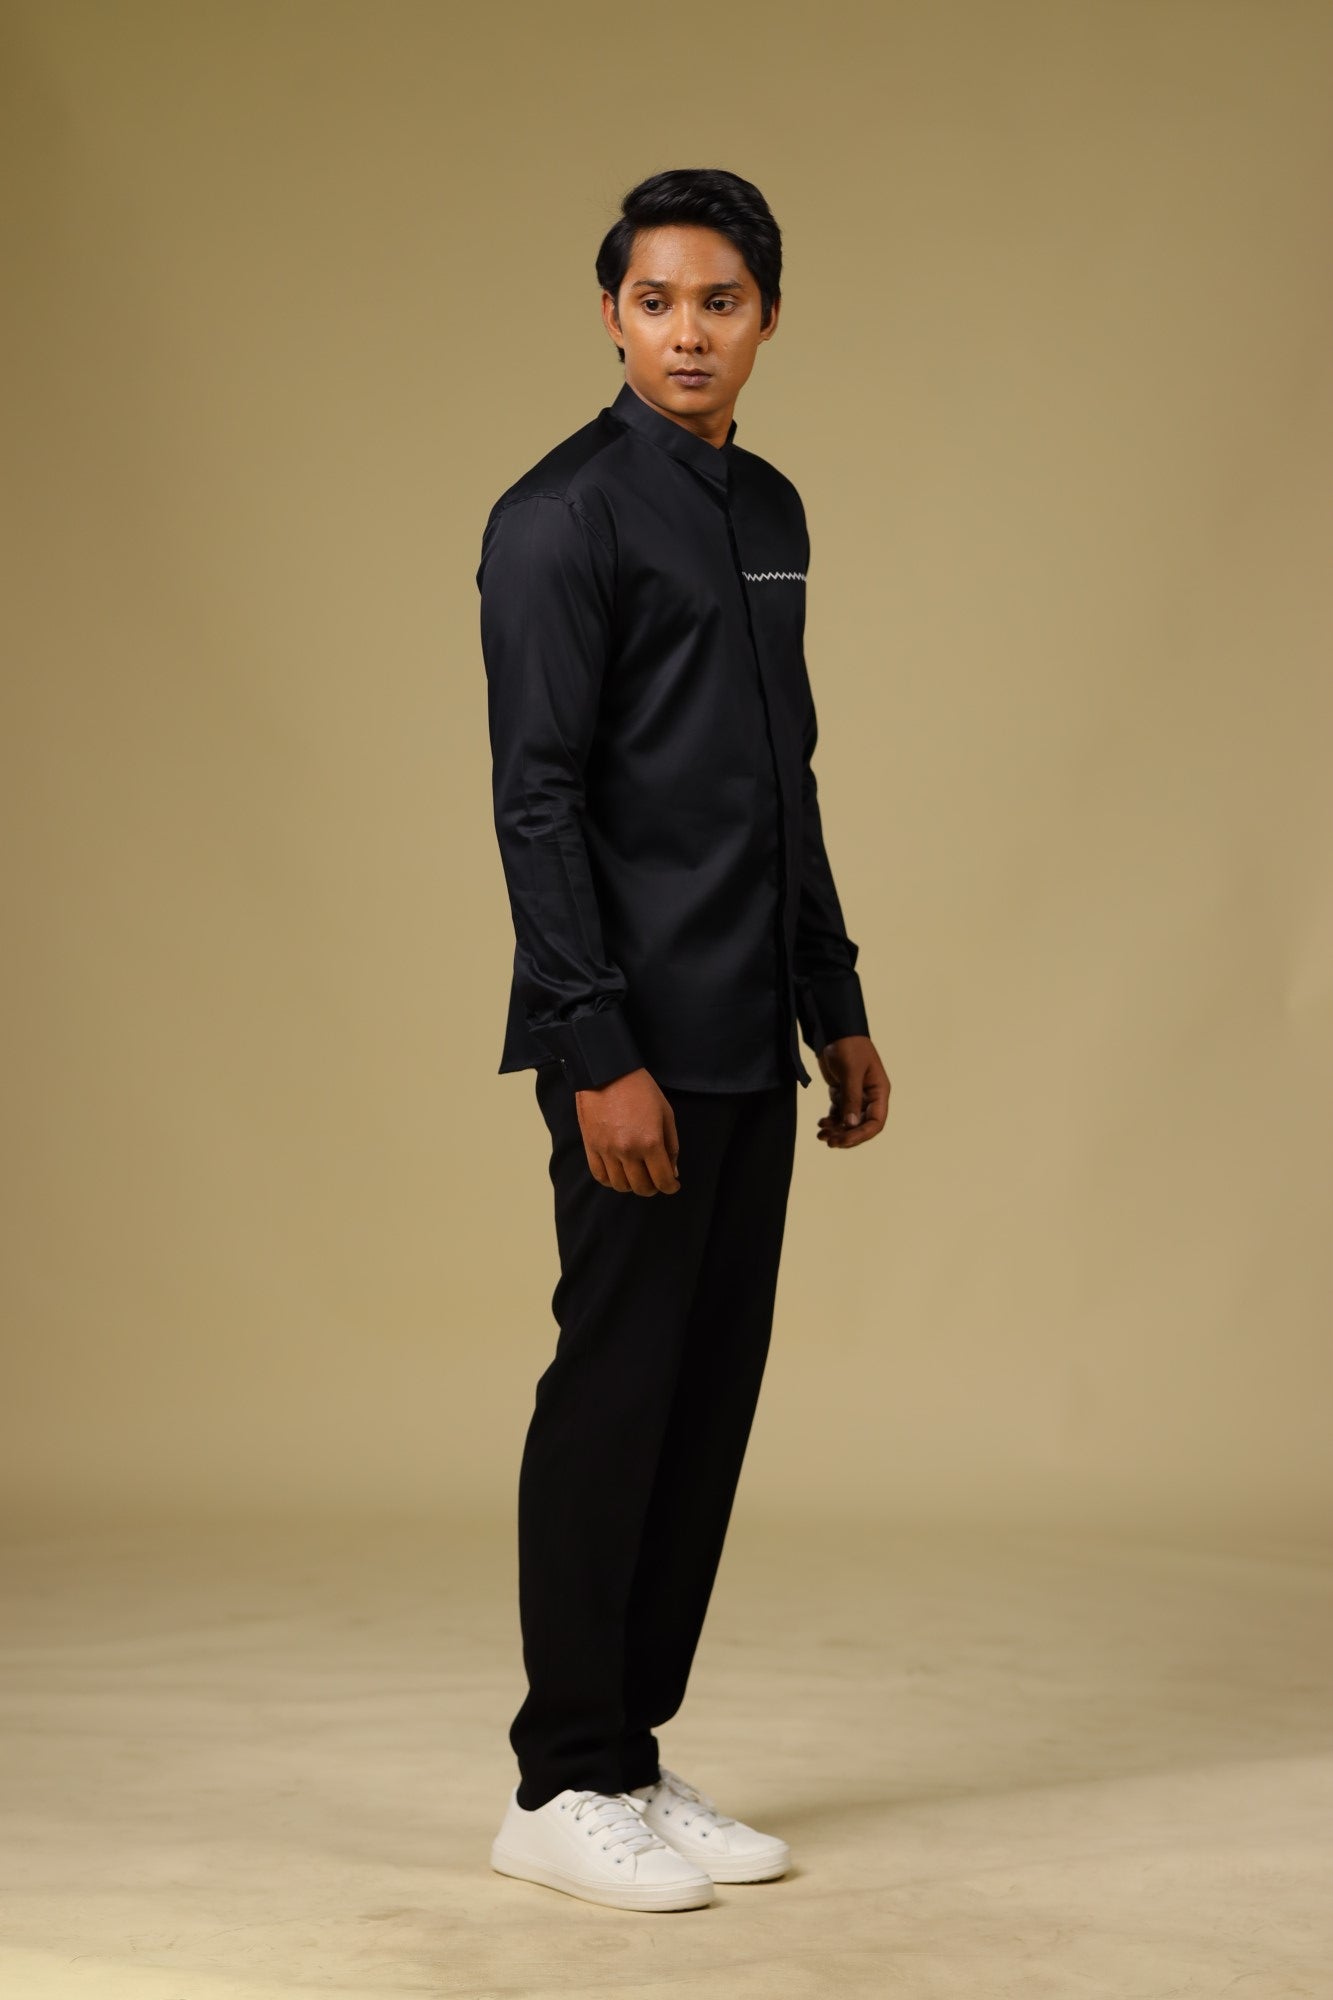 Men's Black Color Black Vague Full Sleeves Casual Shirt - Hilo Design